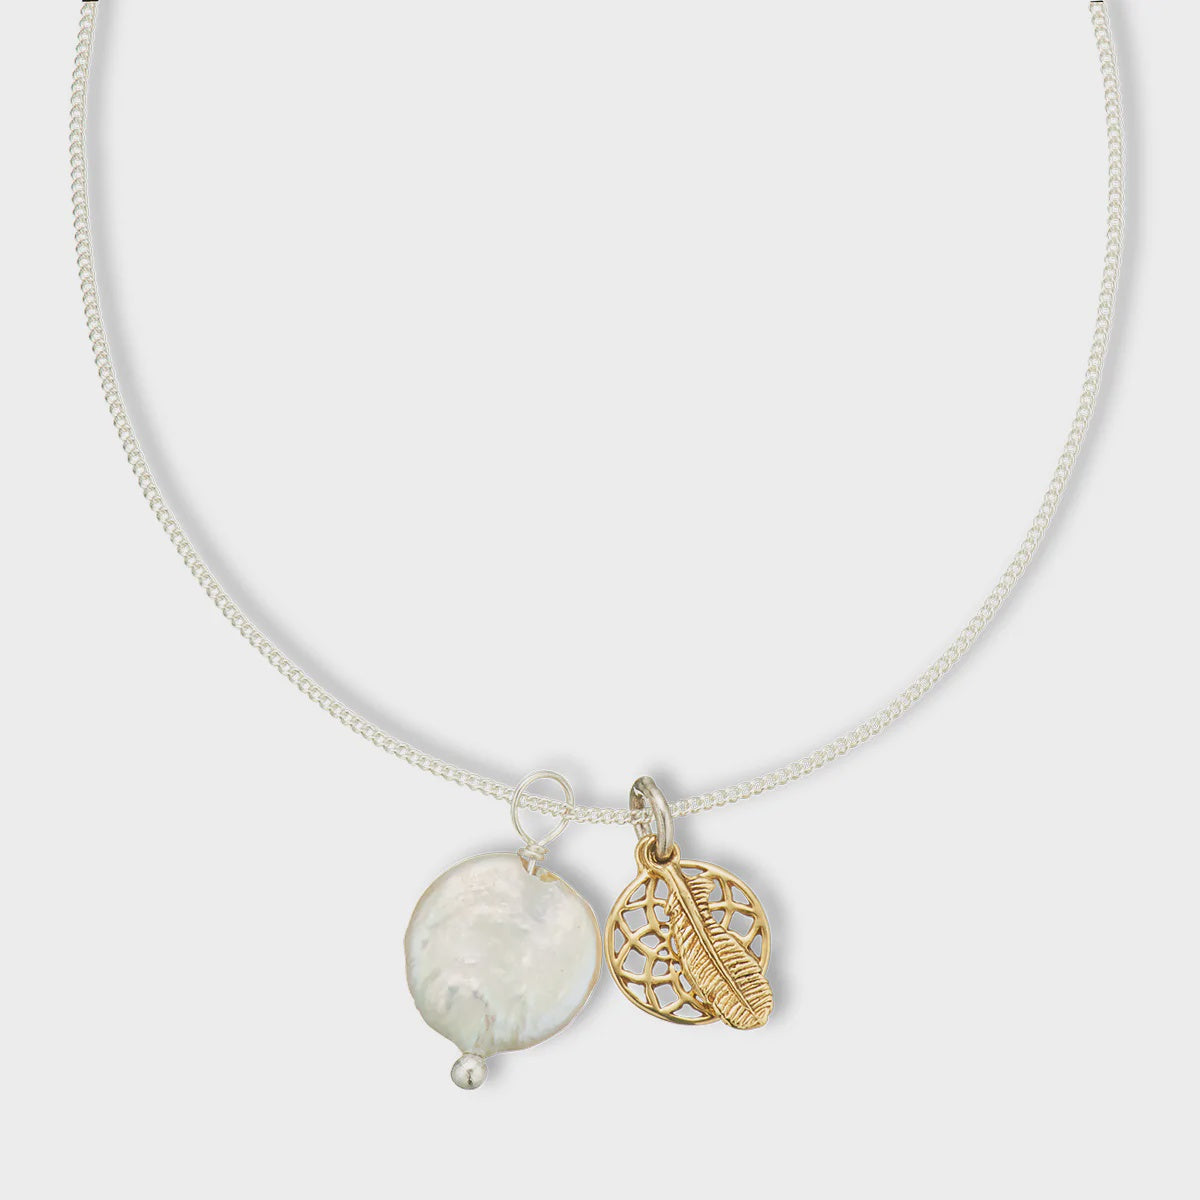 Pearl Amulet Necklace Dream Catcher